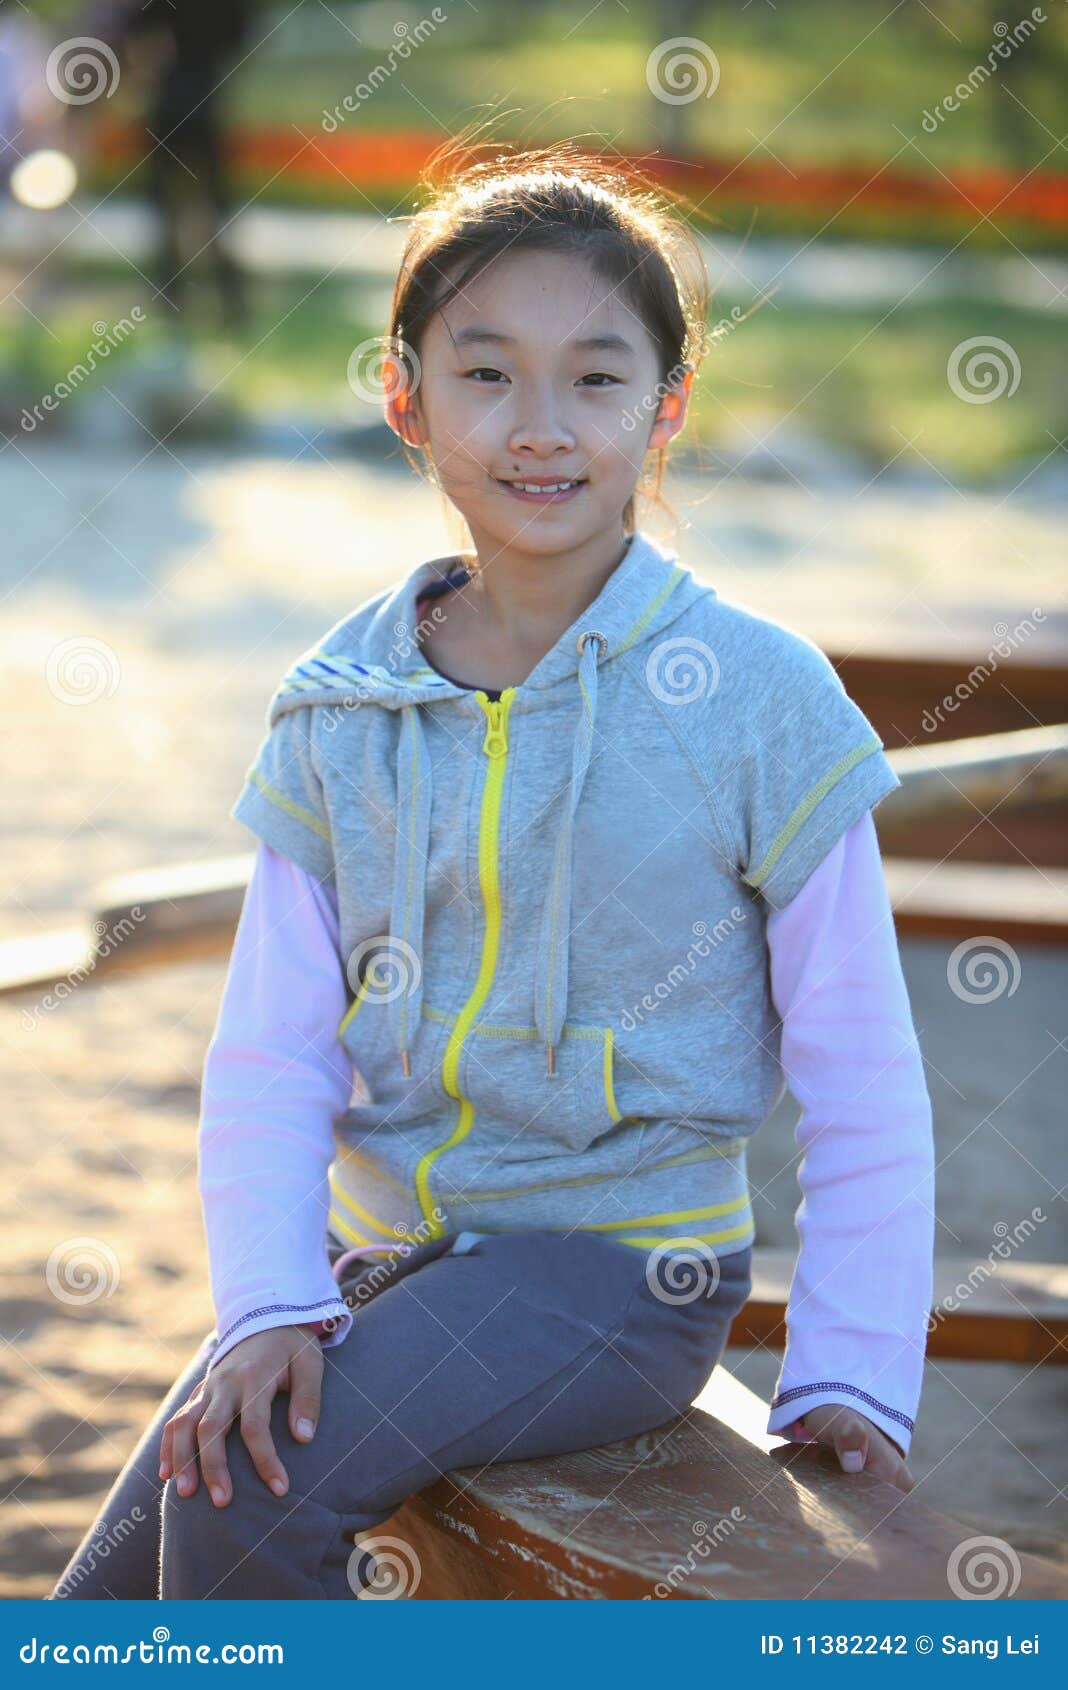 Asian child stock photo. Image of student, park, childhood - 11382242